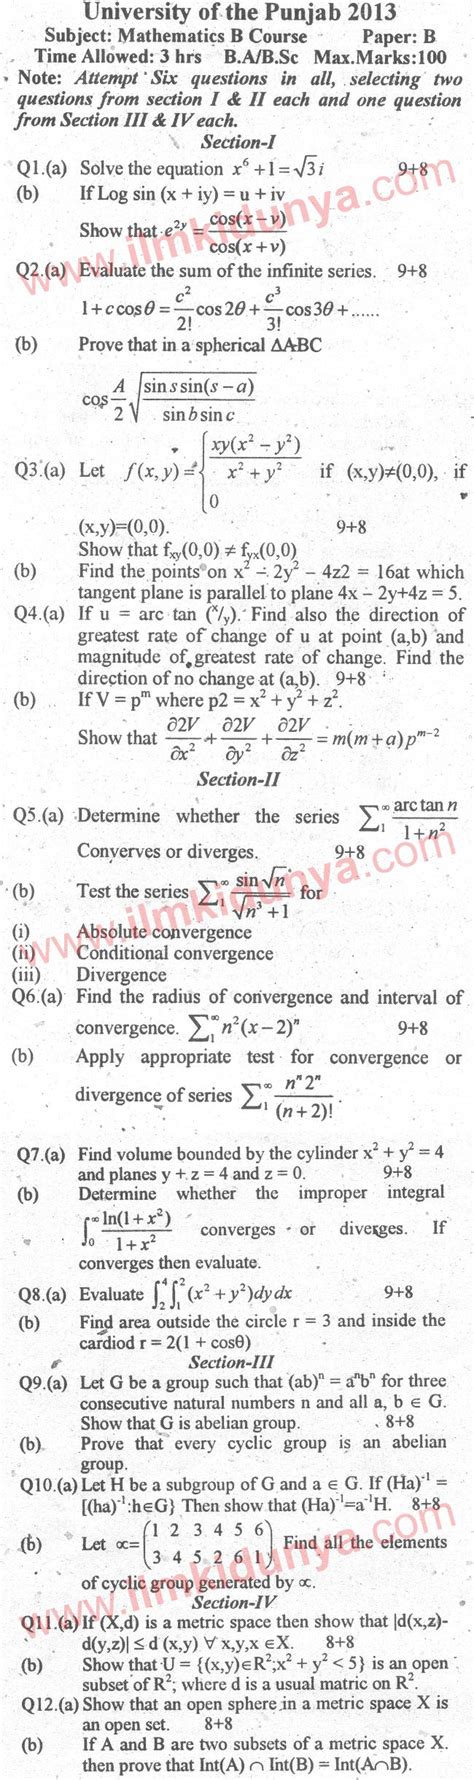 Past Papers 2013 Punjab University BA BSc Math Paper B Course B